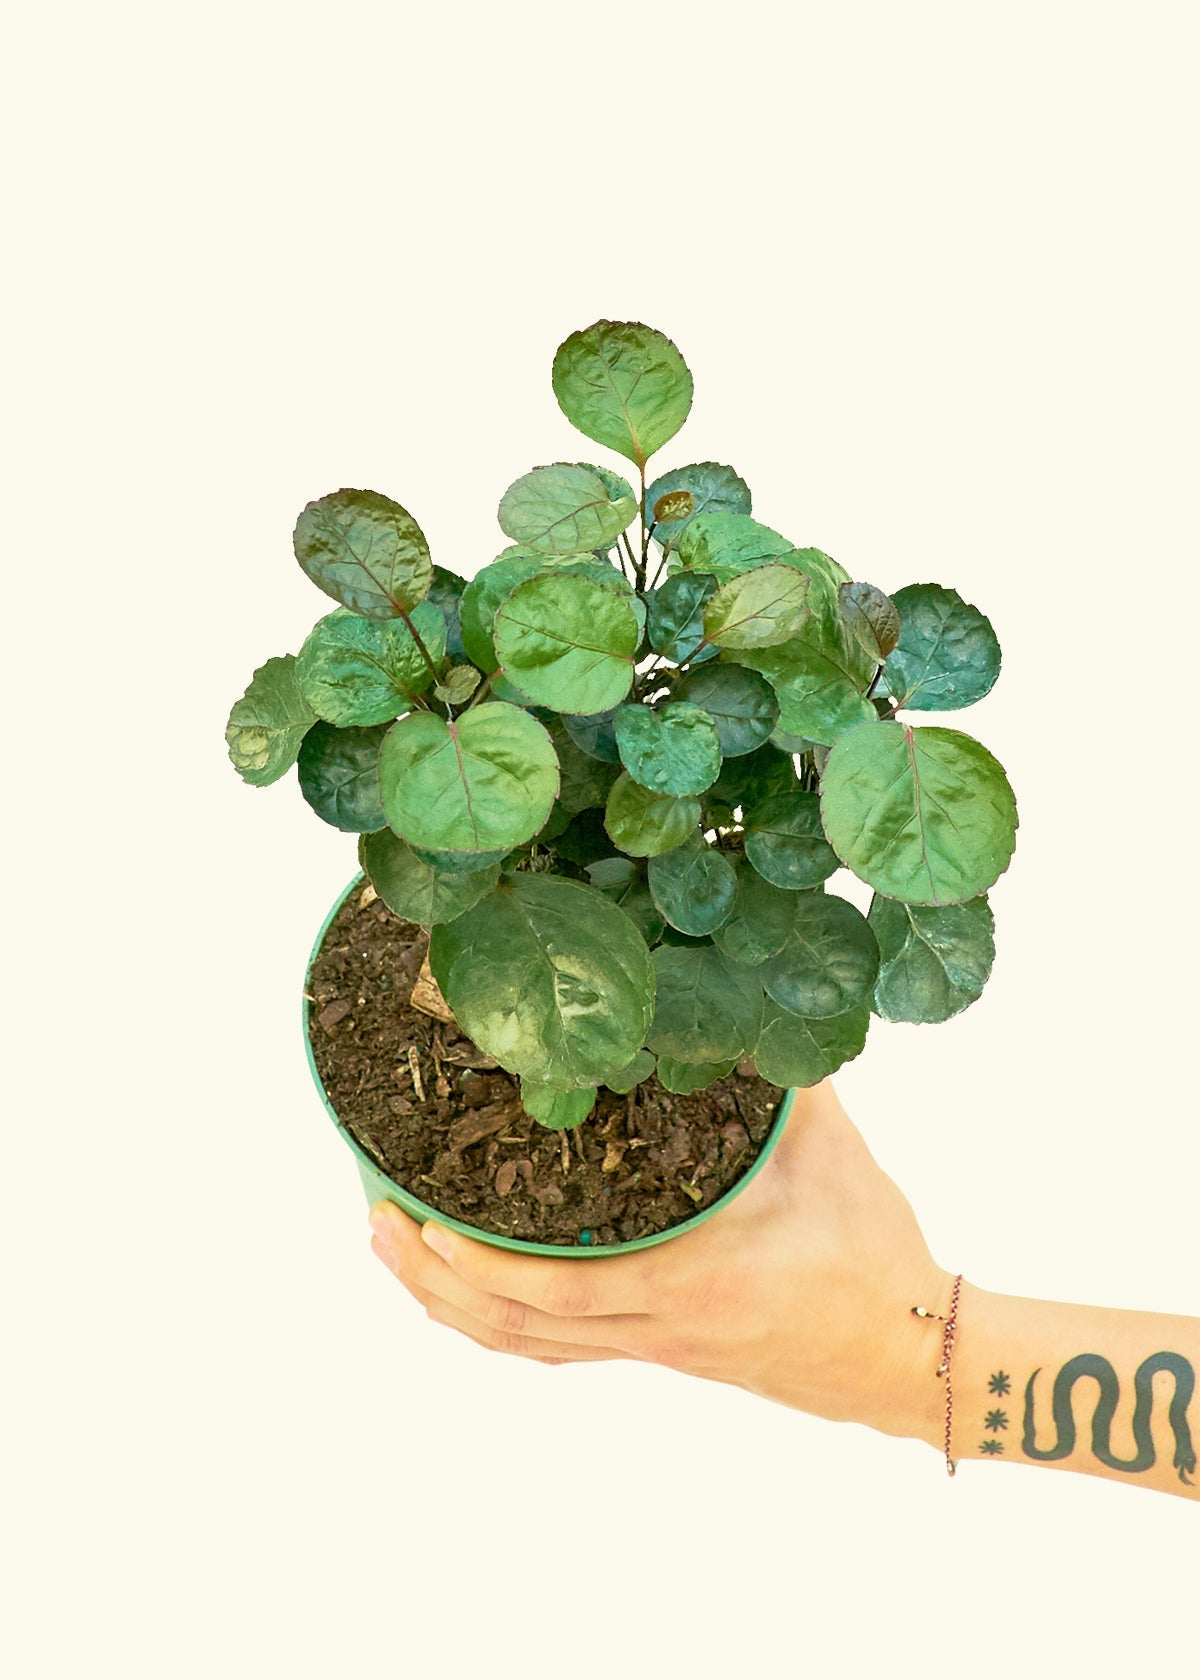 Medium Aralia 'Fabian' in a grow pot.